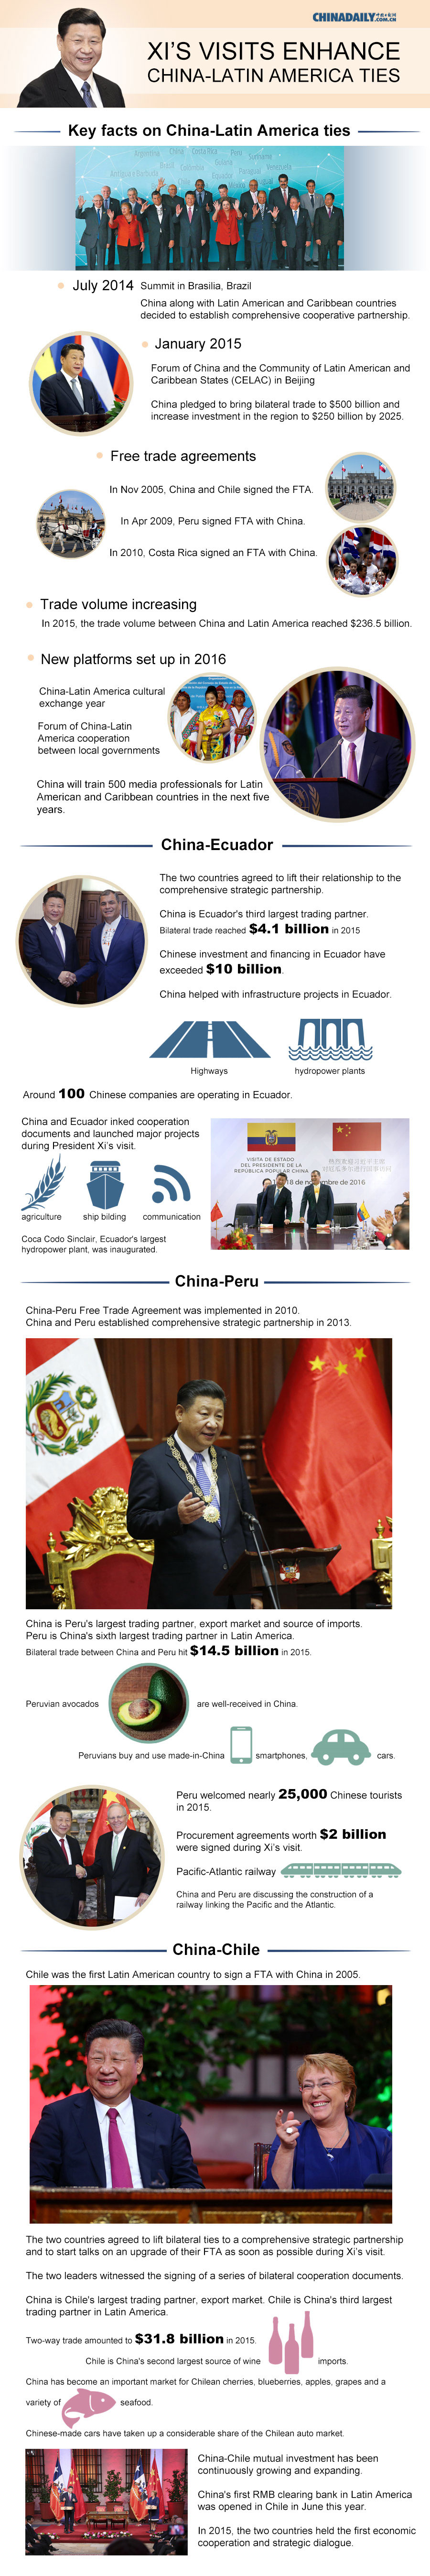 Xi's visits enhance China-Latin America ties